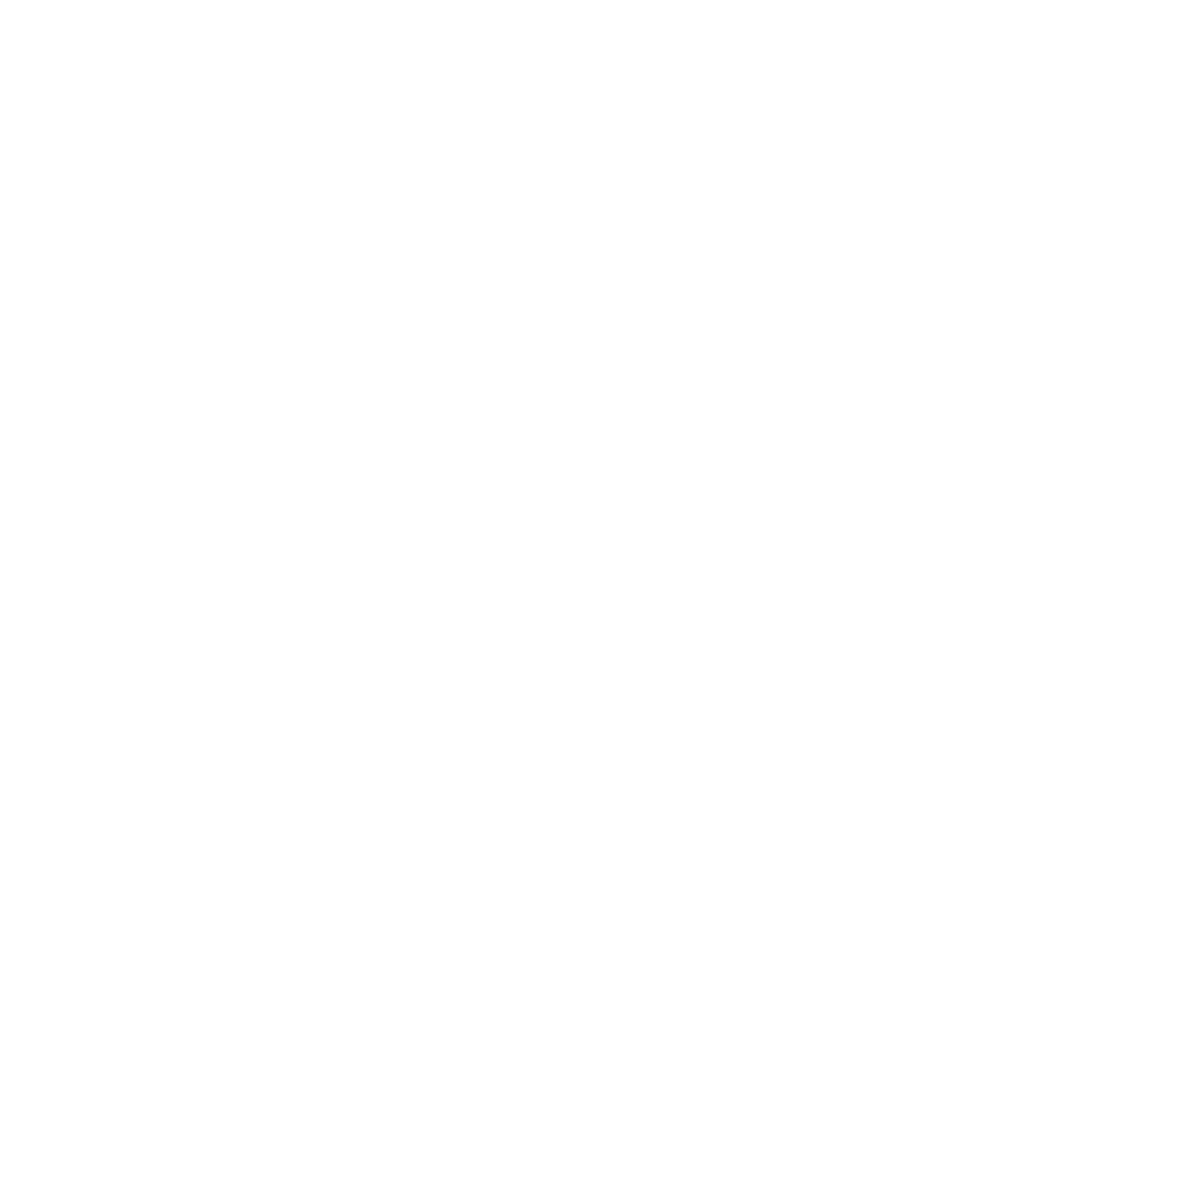 EU Projects @ CERN